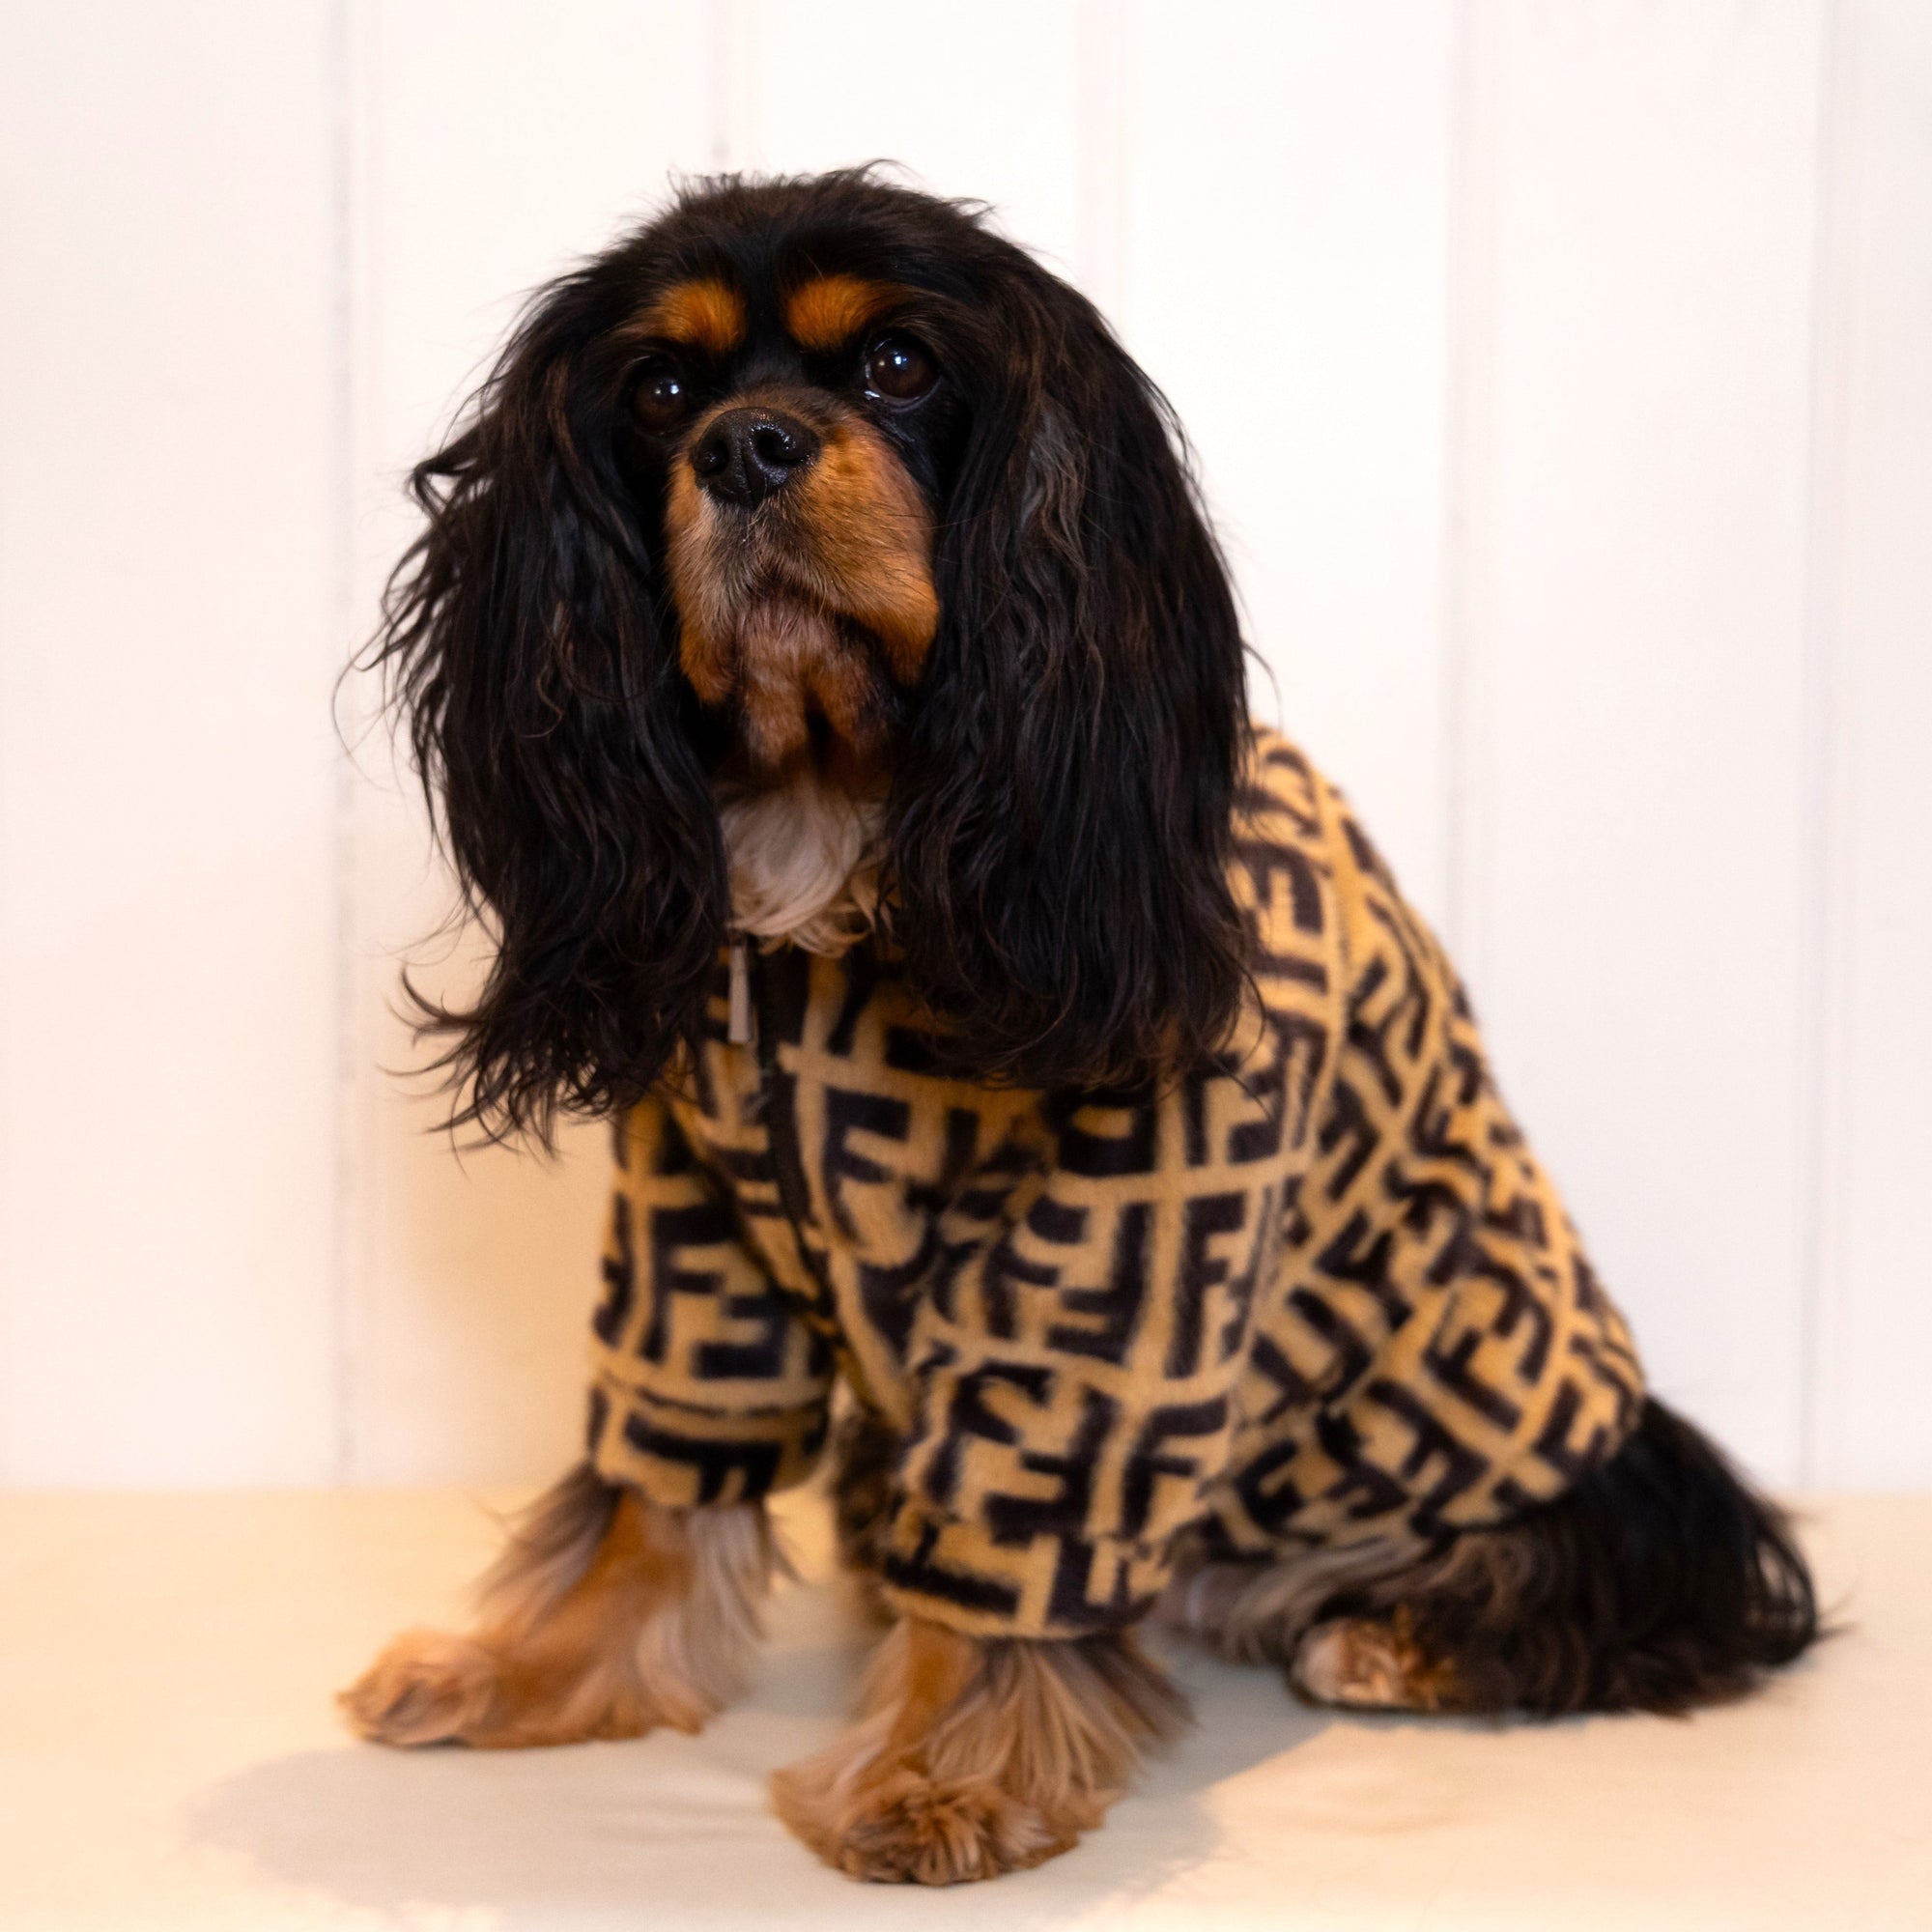 Manhattan Fur Dog Coat